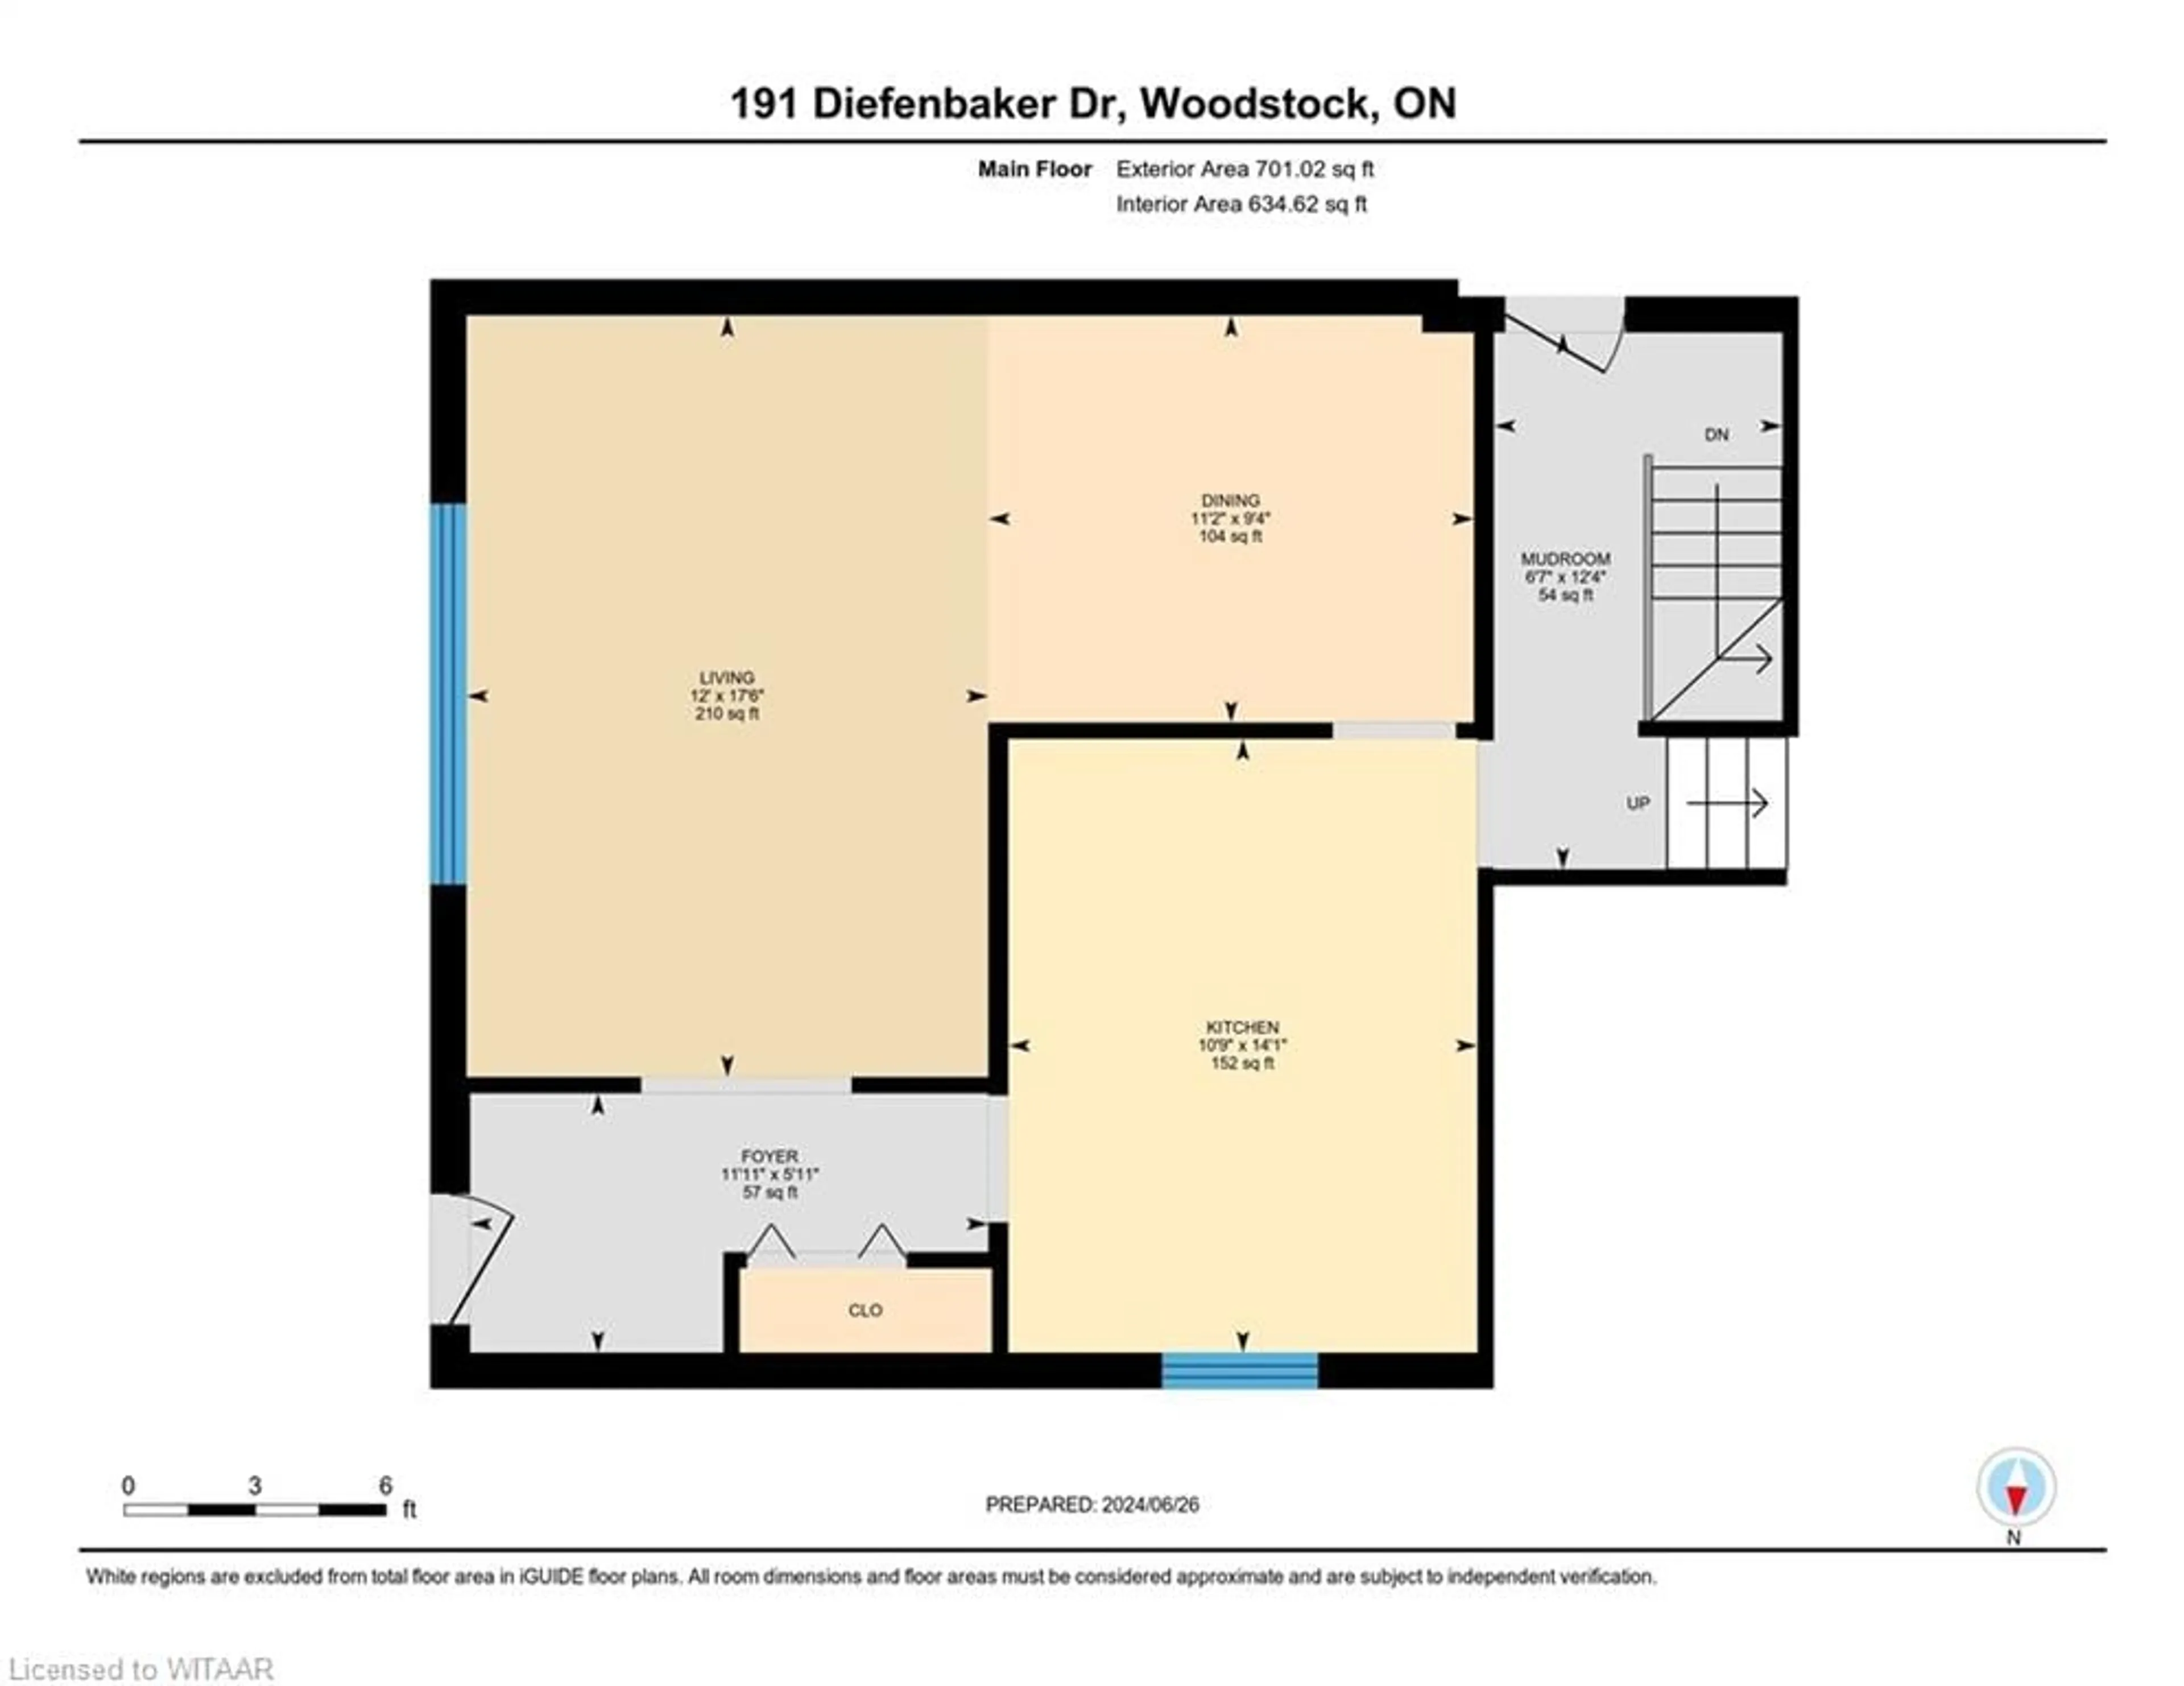 Floor plan for 191 Diefenbaker Dr, Woodstock Ontario N4S 8K1